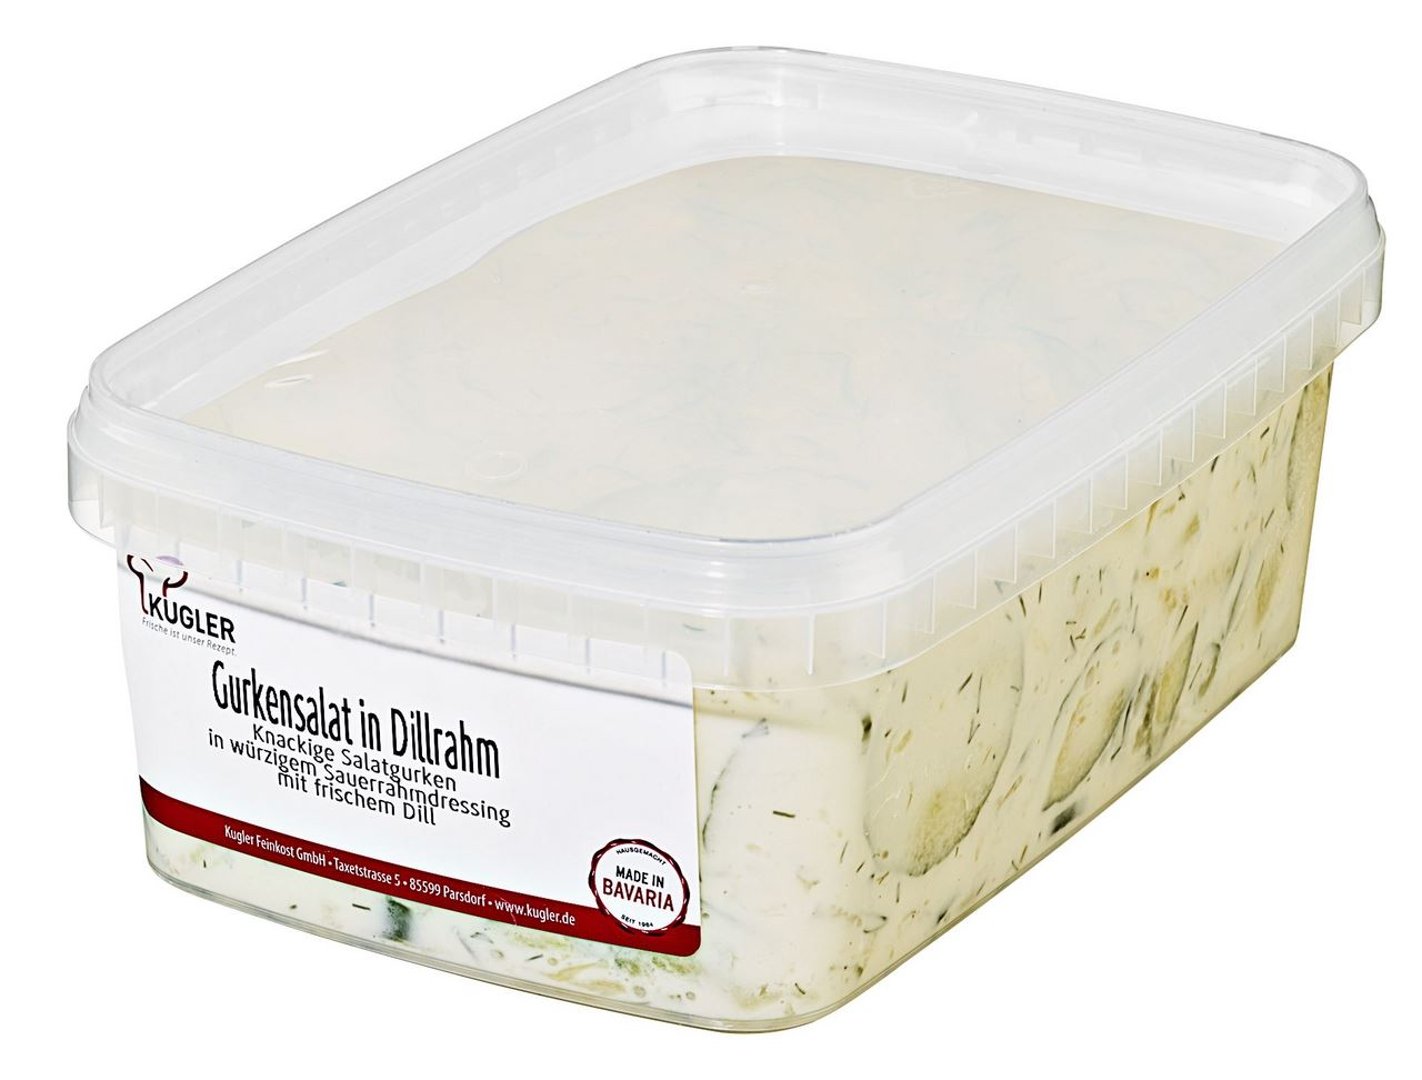 Kugler - Gurkensalat in Dillrahm - 1 x 1 kg Schale